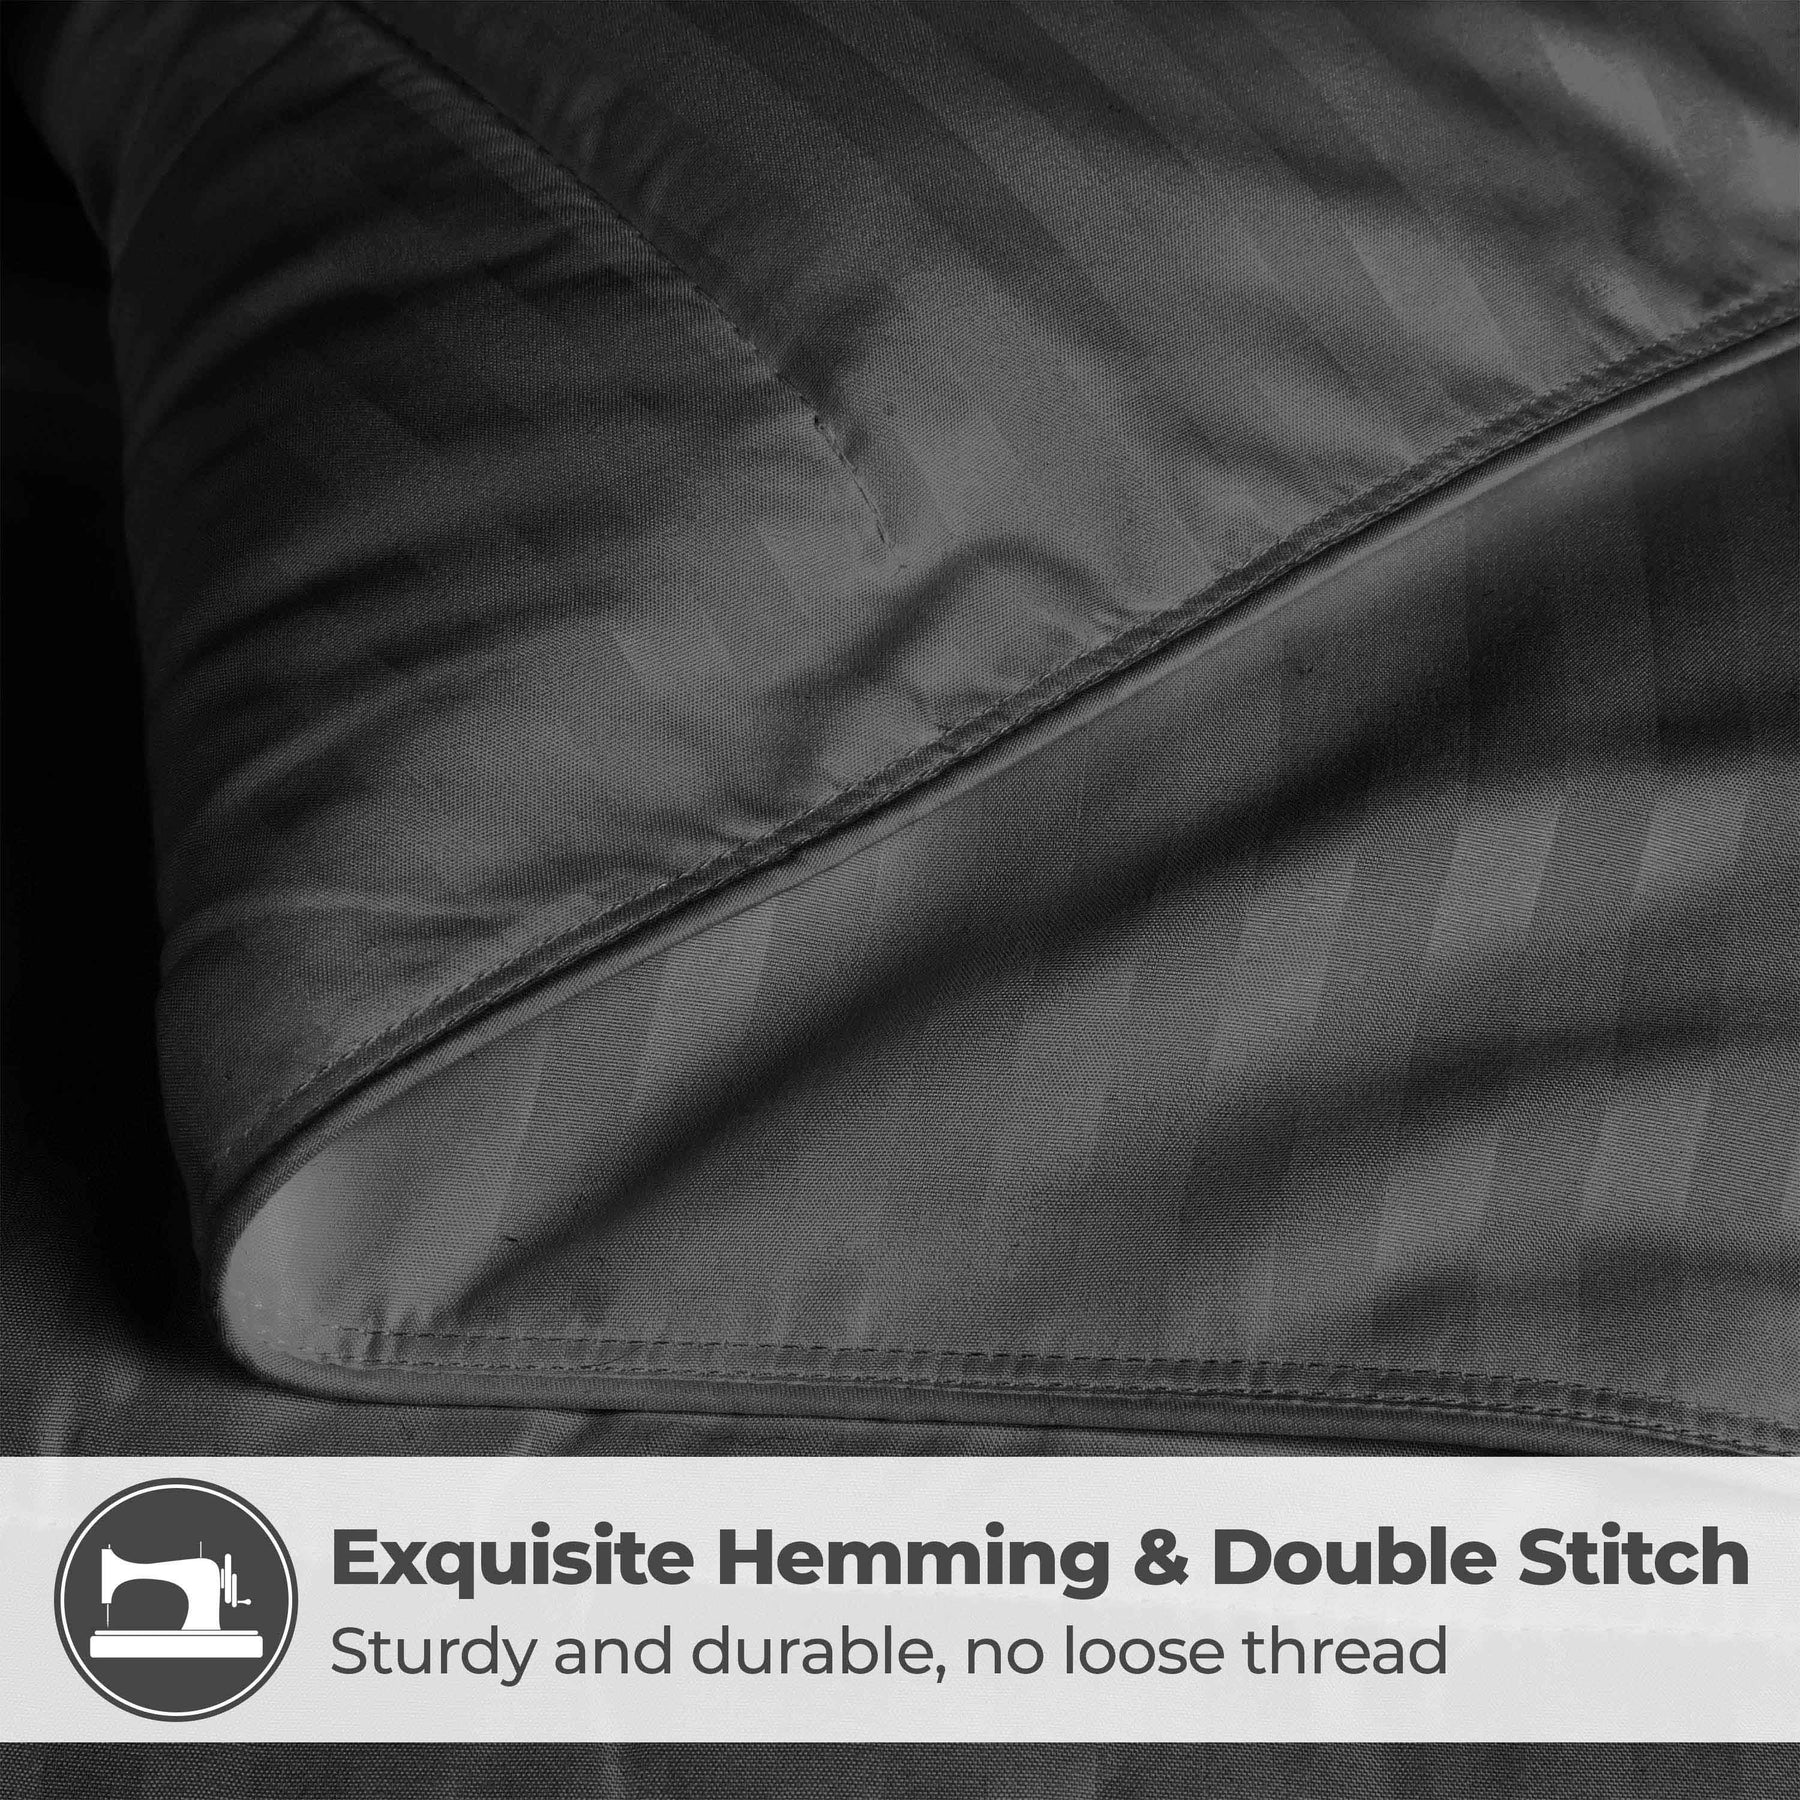 Brushed Microfiber Down Alternative Medium Weight Striped Comforter - Charcoal